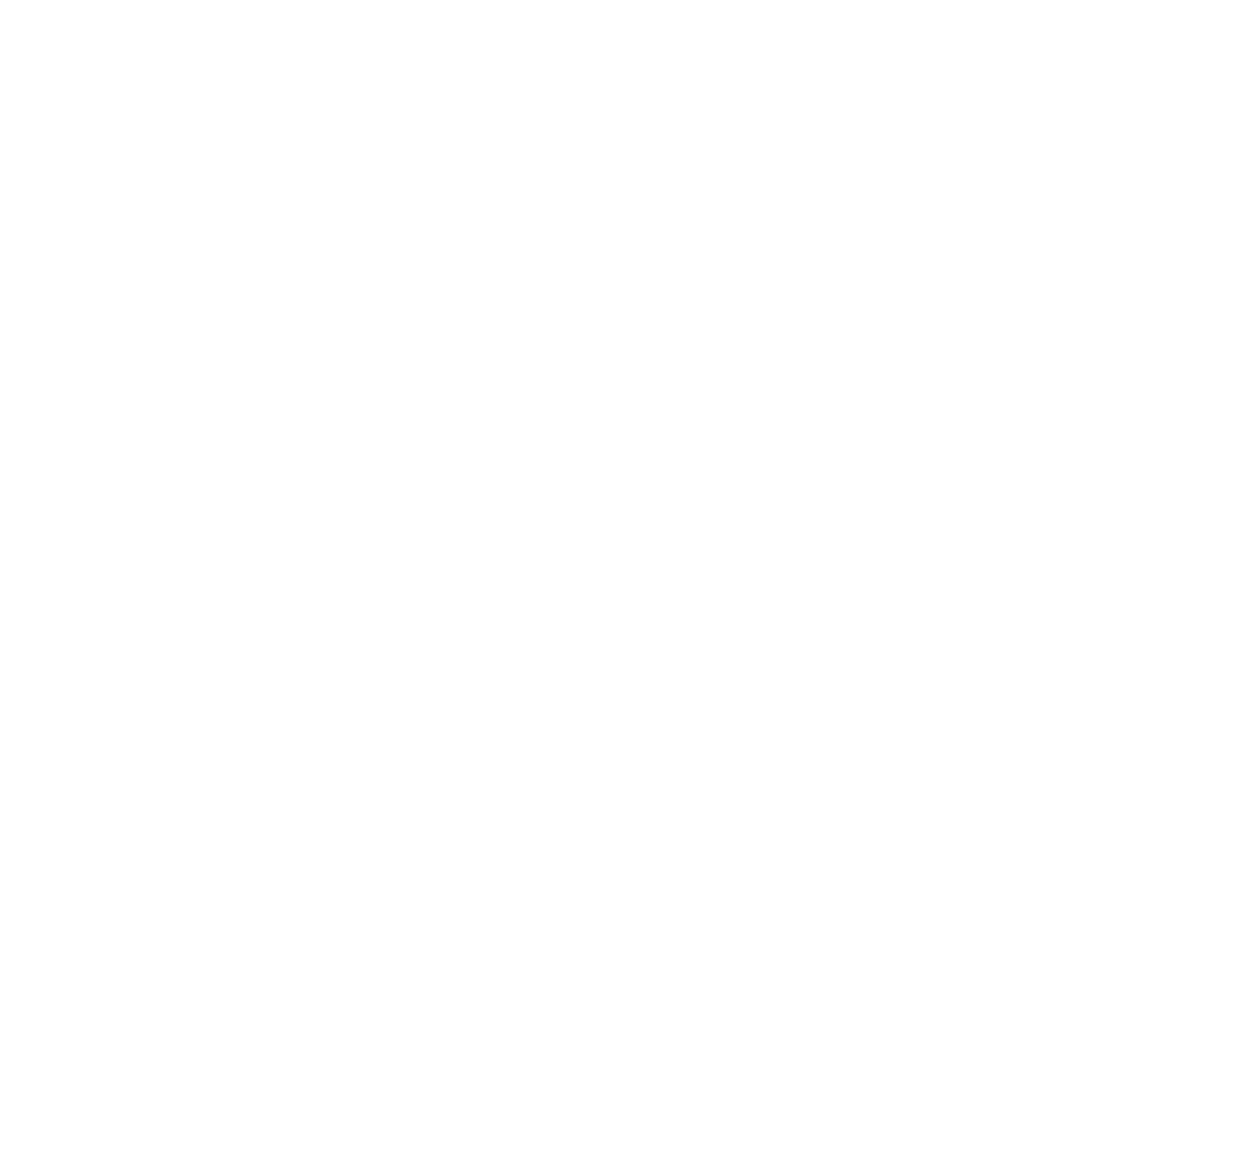 Good Orchestra